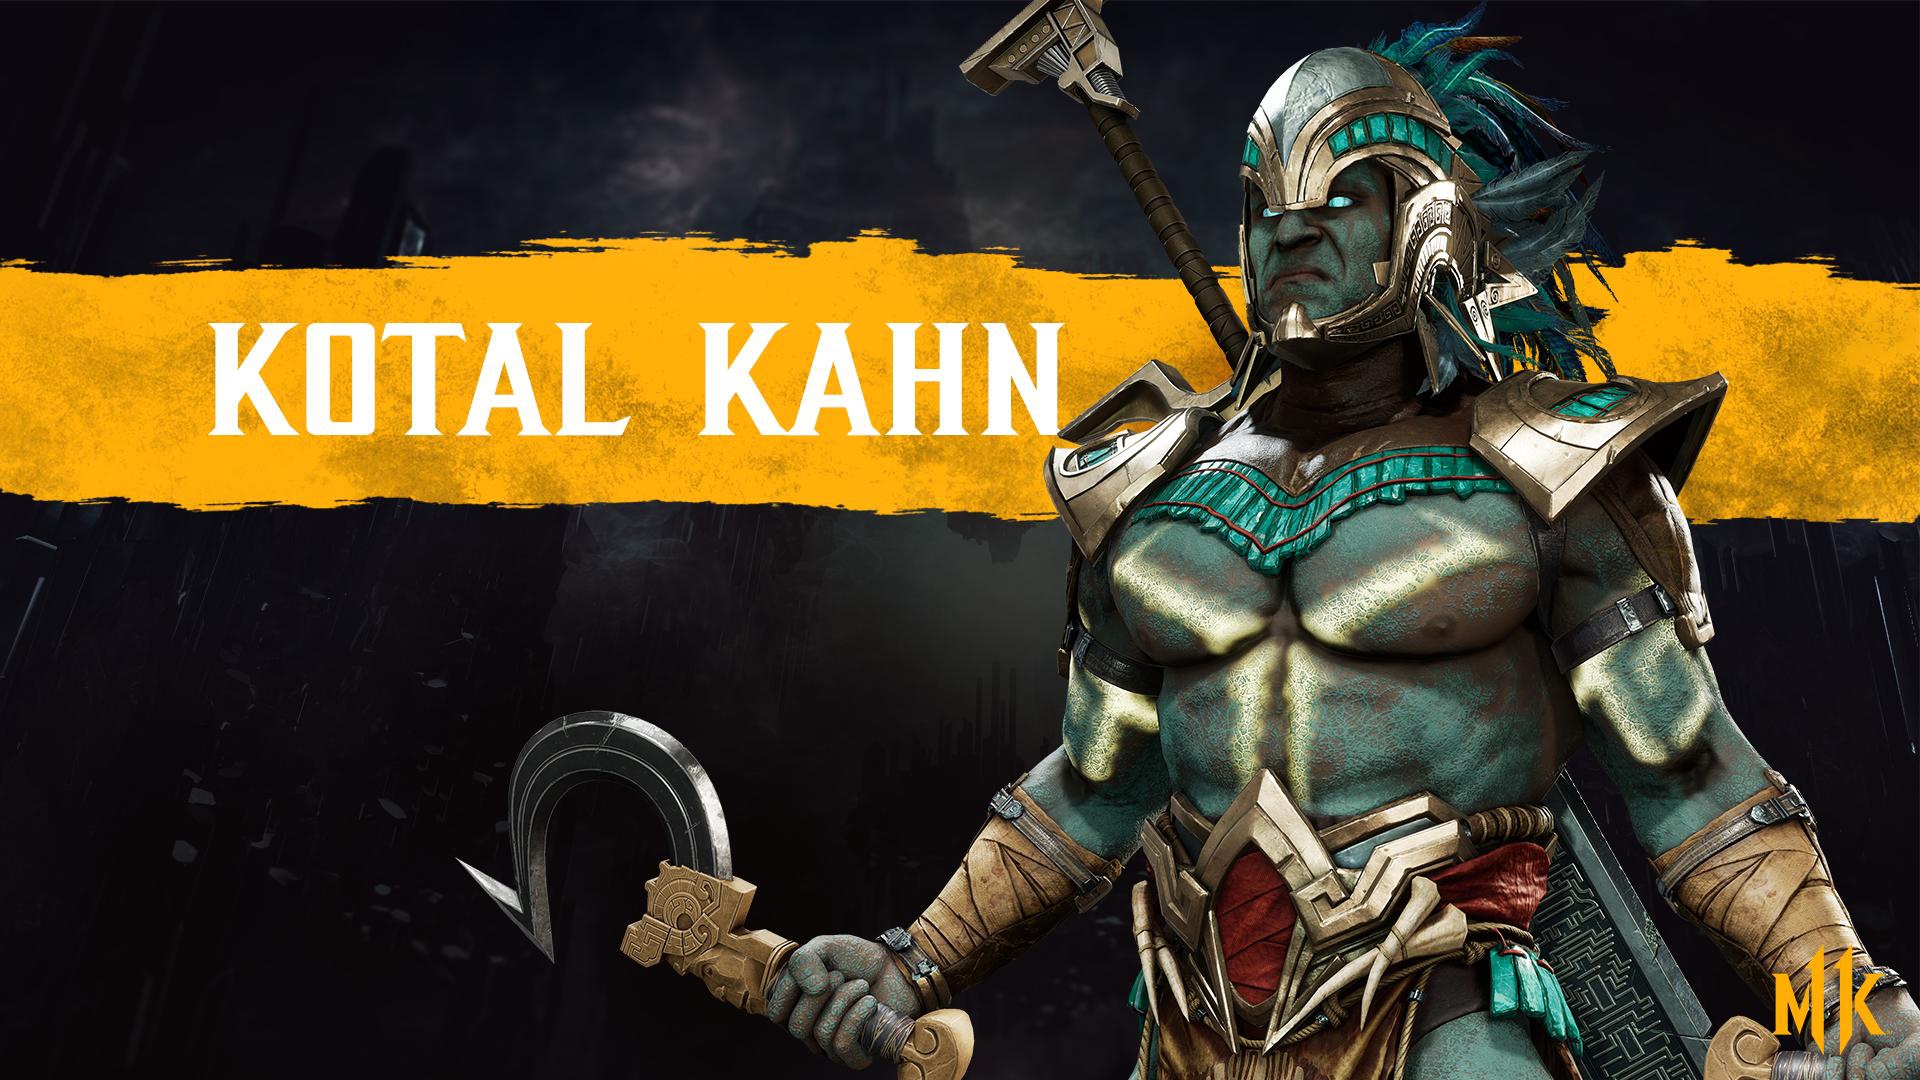 Kotal Kahn Mortal Kombat 11 1920x1080